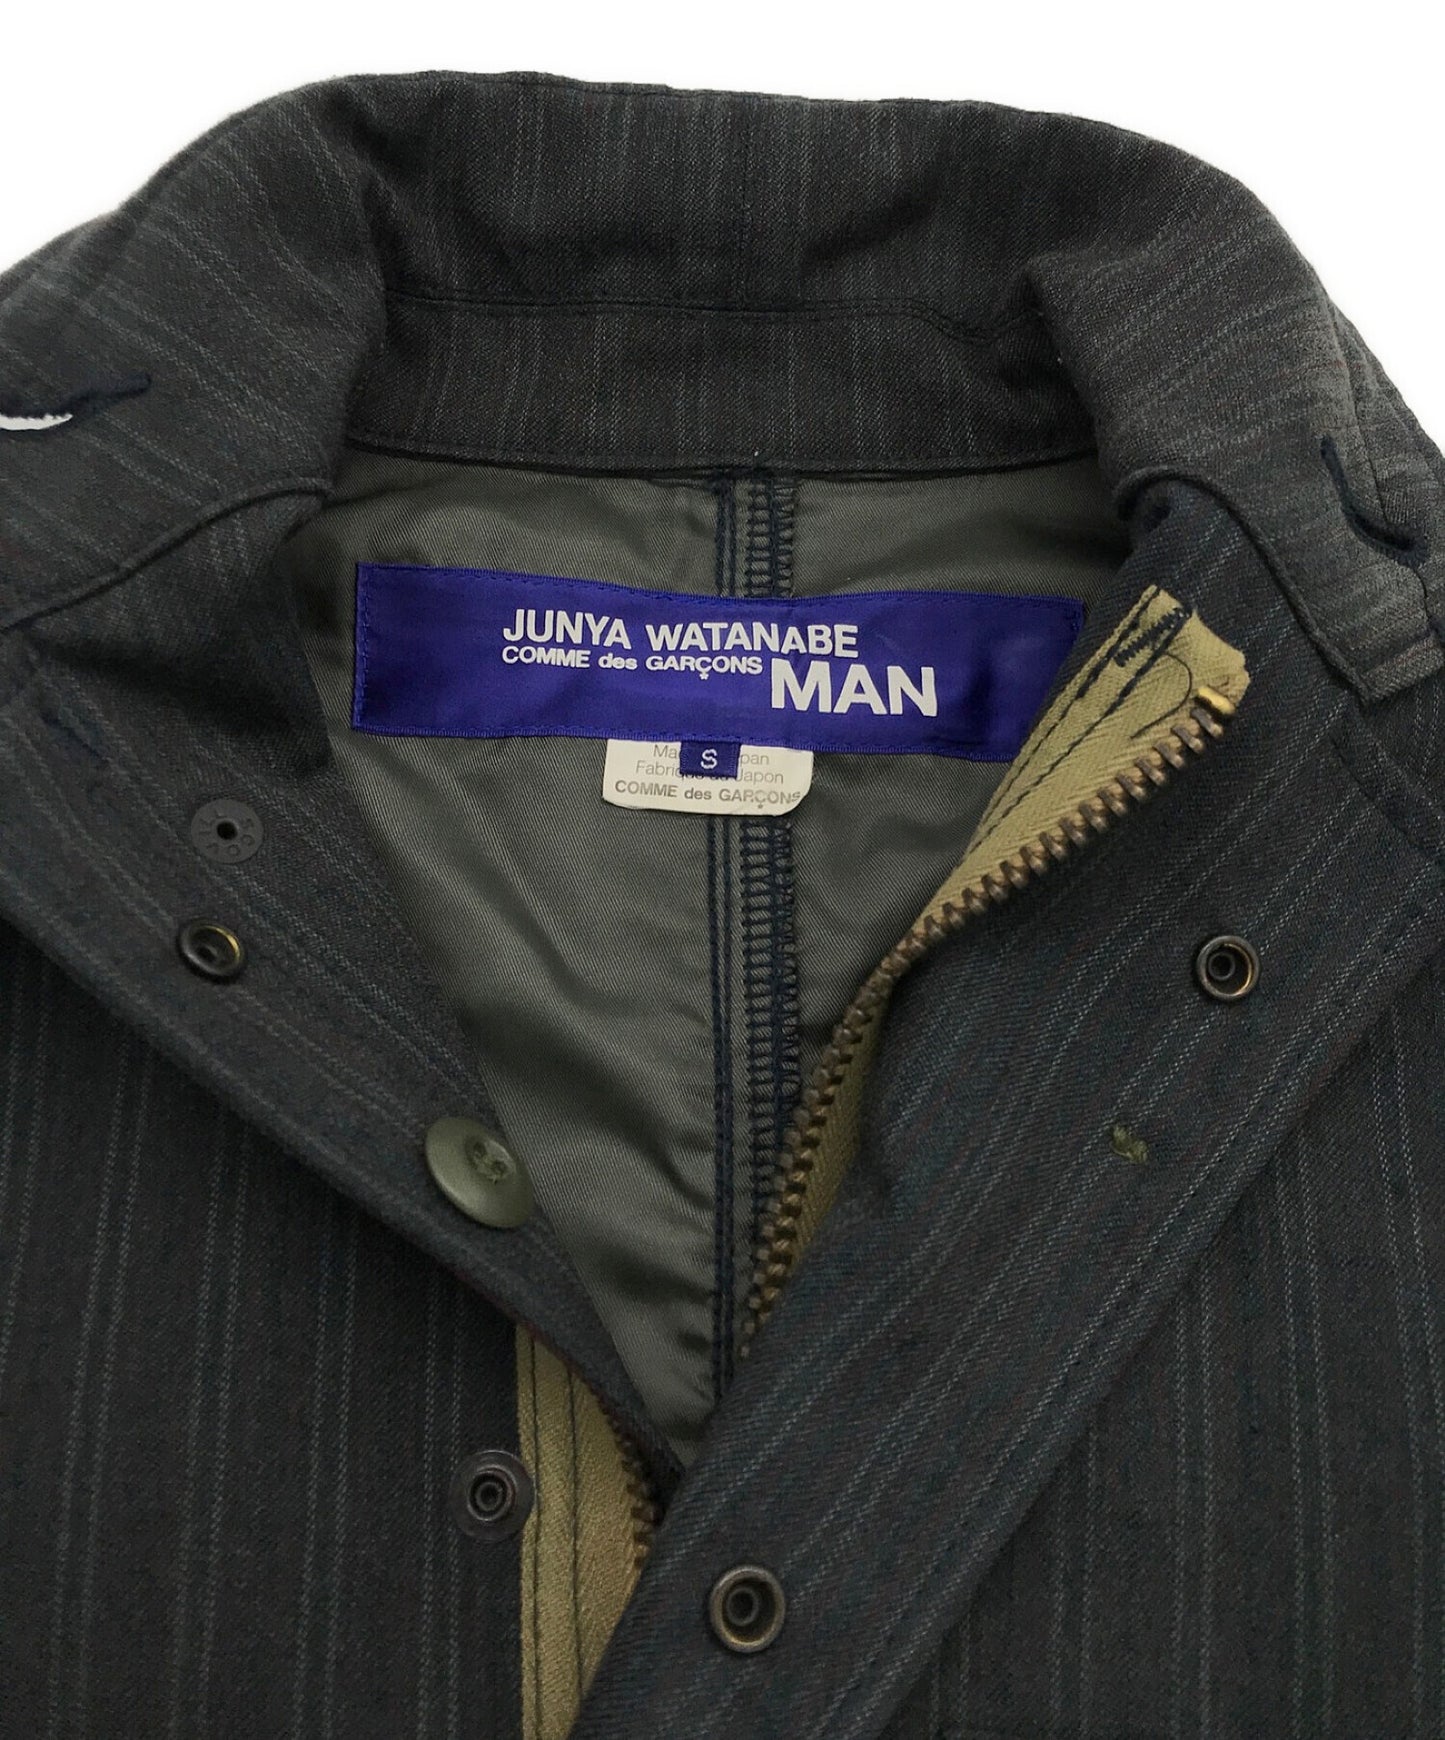 Comme des Garcons Junya Watanabe Man Ma1 재구성 된 맞춤 재킷 WR-J018